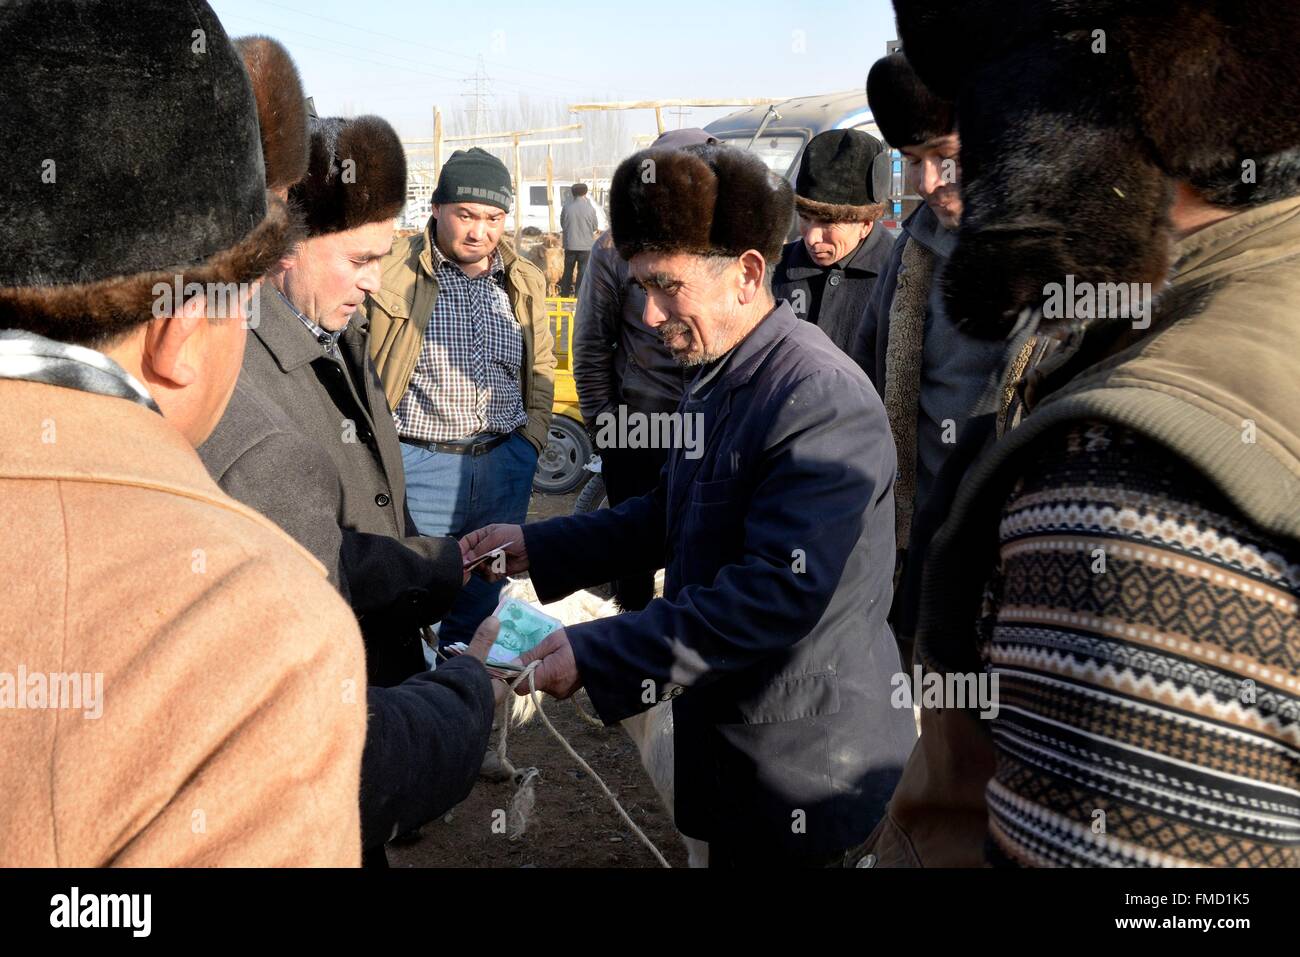 Cina, Xinjiang Uyghur Regione autonoma, Kashgar (Kashi), domenica Mercato del Bestiame Foto Stock